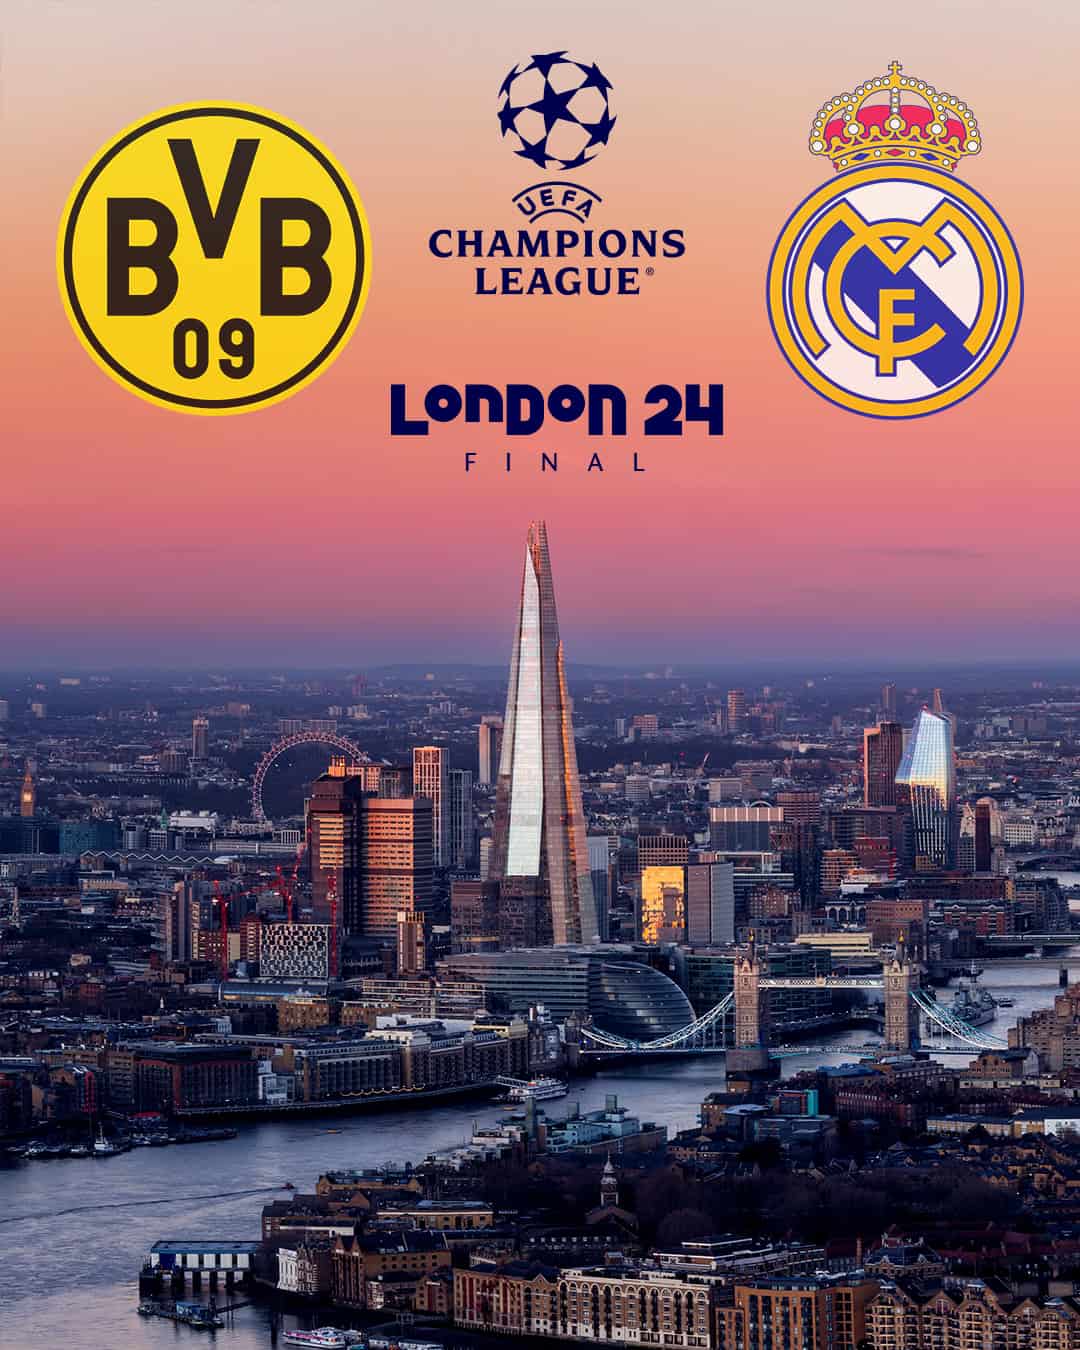 La final de la Champions se jugará en Londres | Imagen: @Champions League